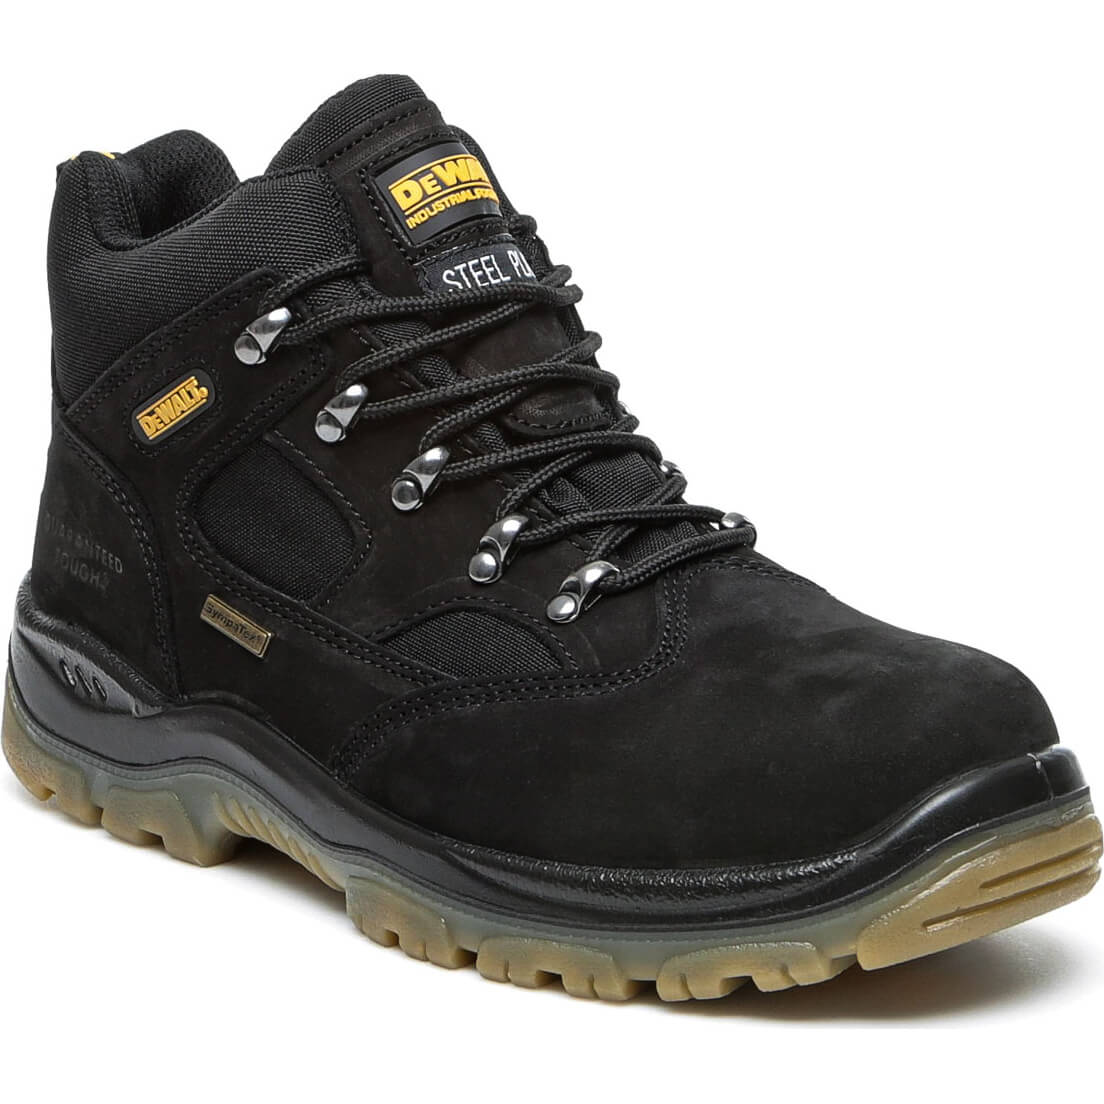 DeWalt Challenger 3 Sympatex Waterproof Safety Hiker Boots Black Size 9